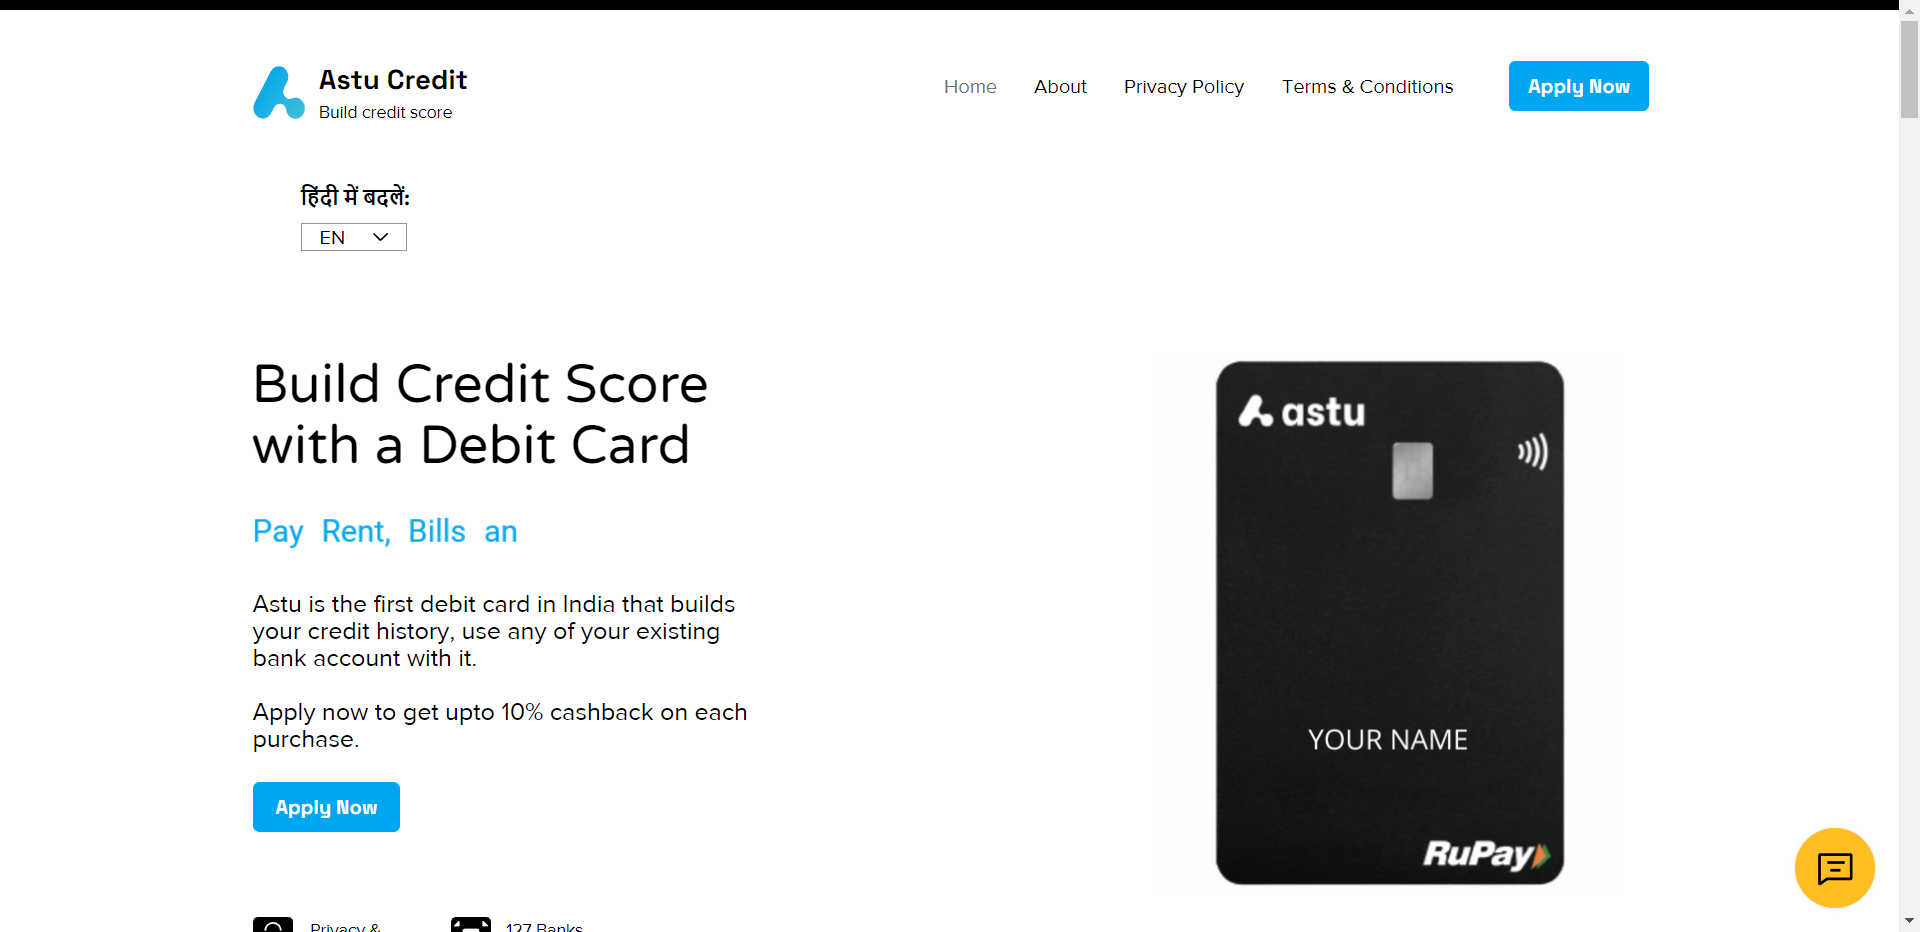 Astu Credit Home page